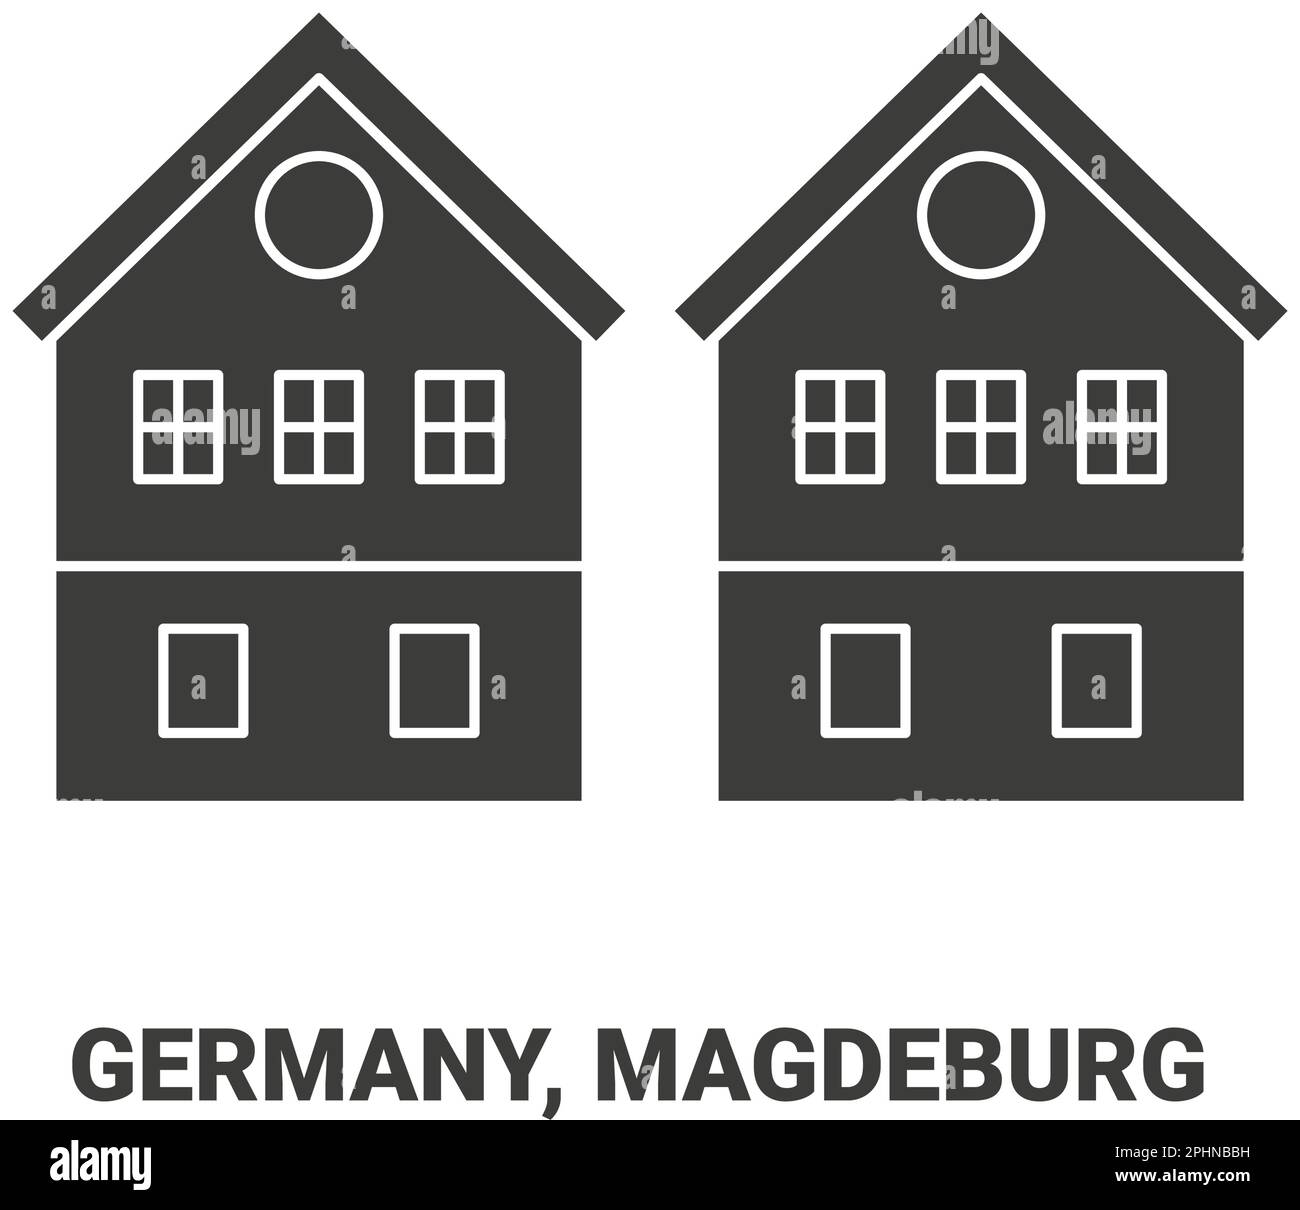 Germany, Magdeburg travel landmark vector illustration Stock Vector